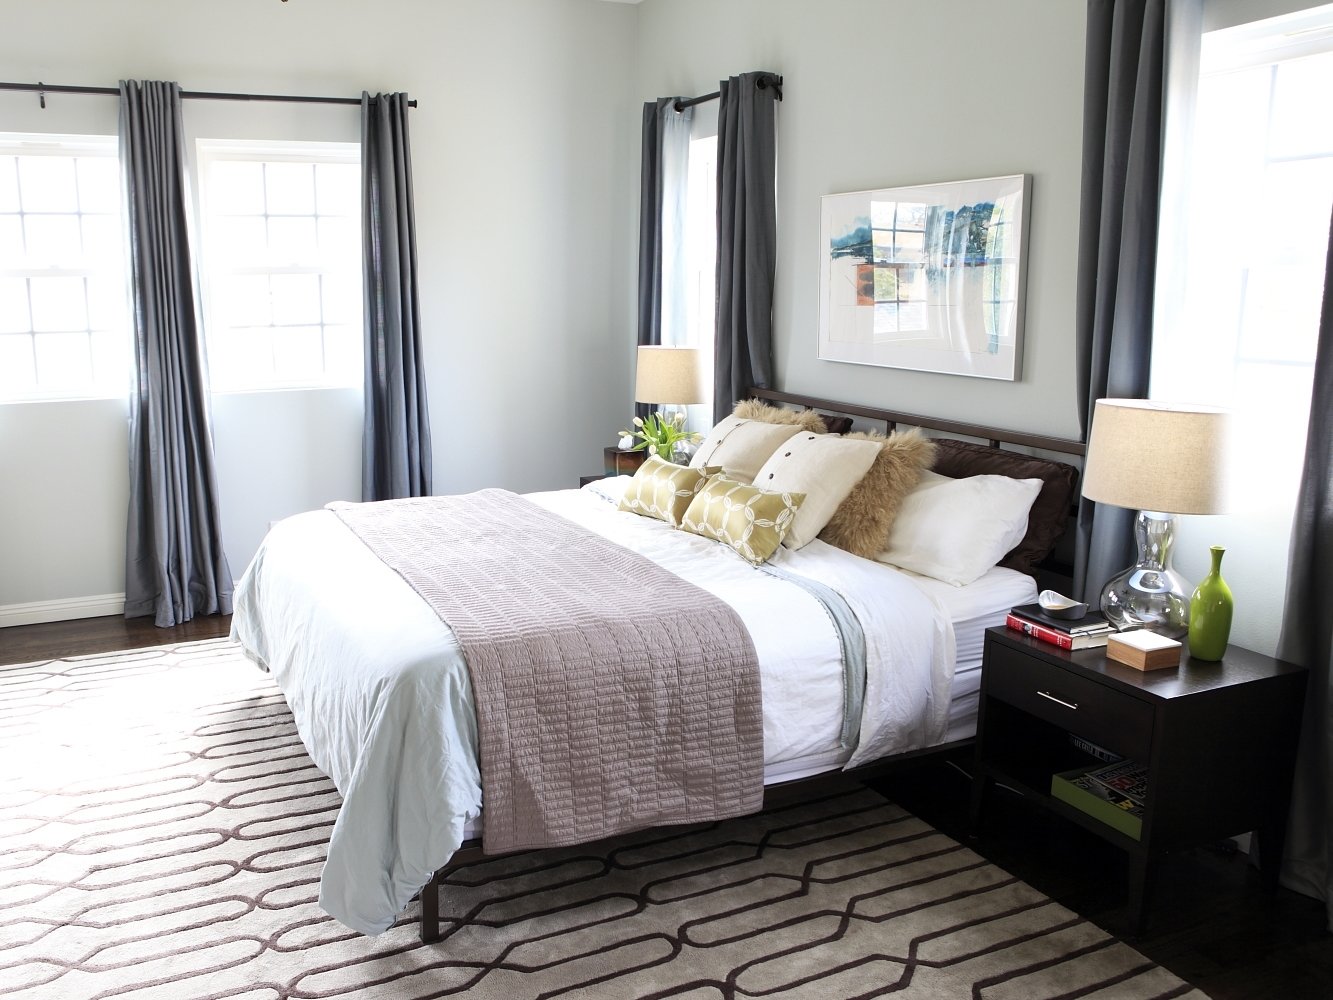 10 Best Window Treatment Ideas For Bedroom bedroom window treatment ideas decorating charter home ideas 1 2022